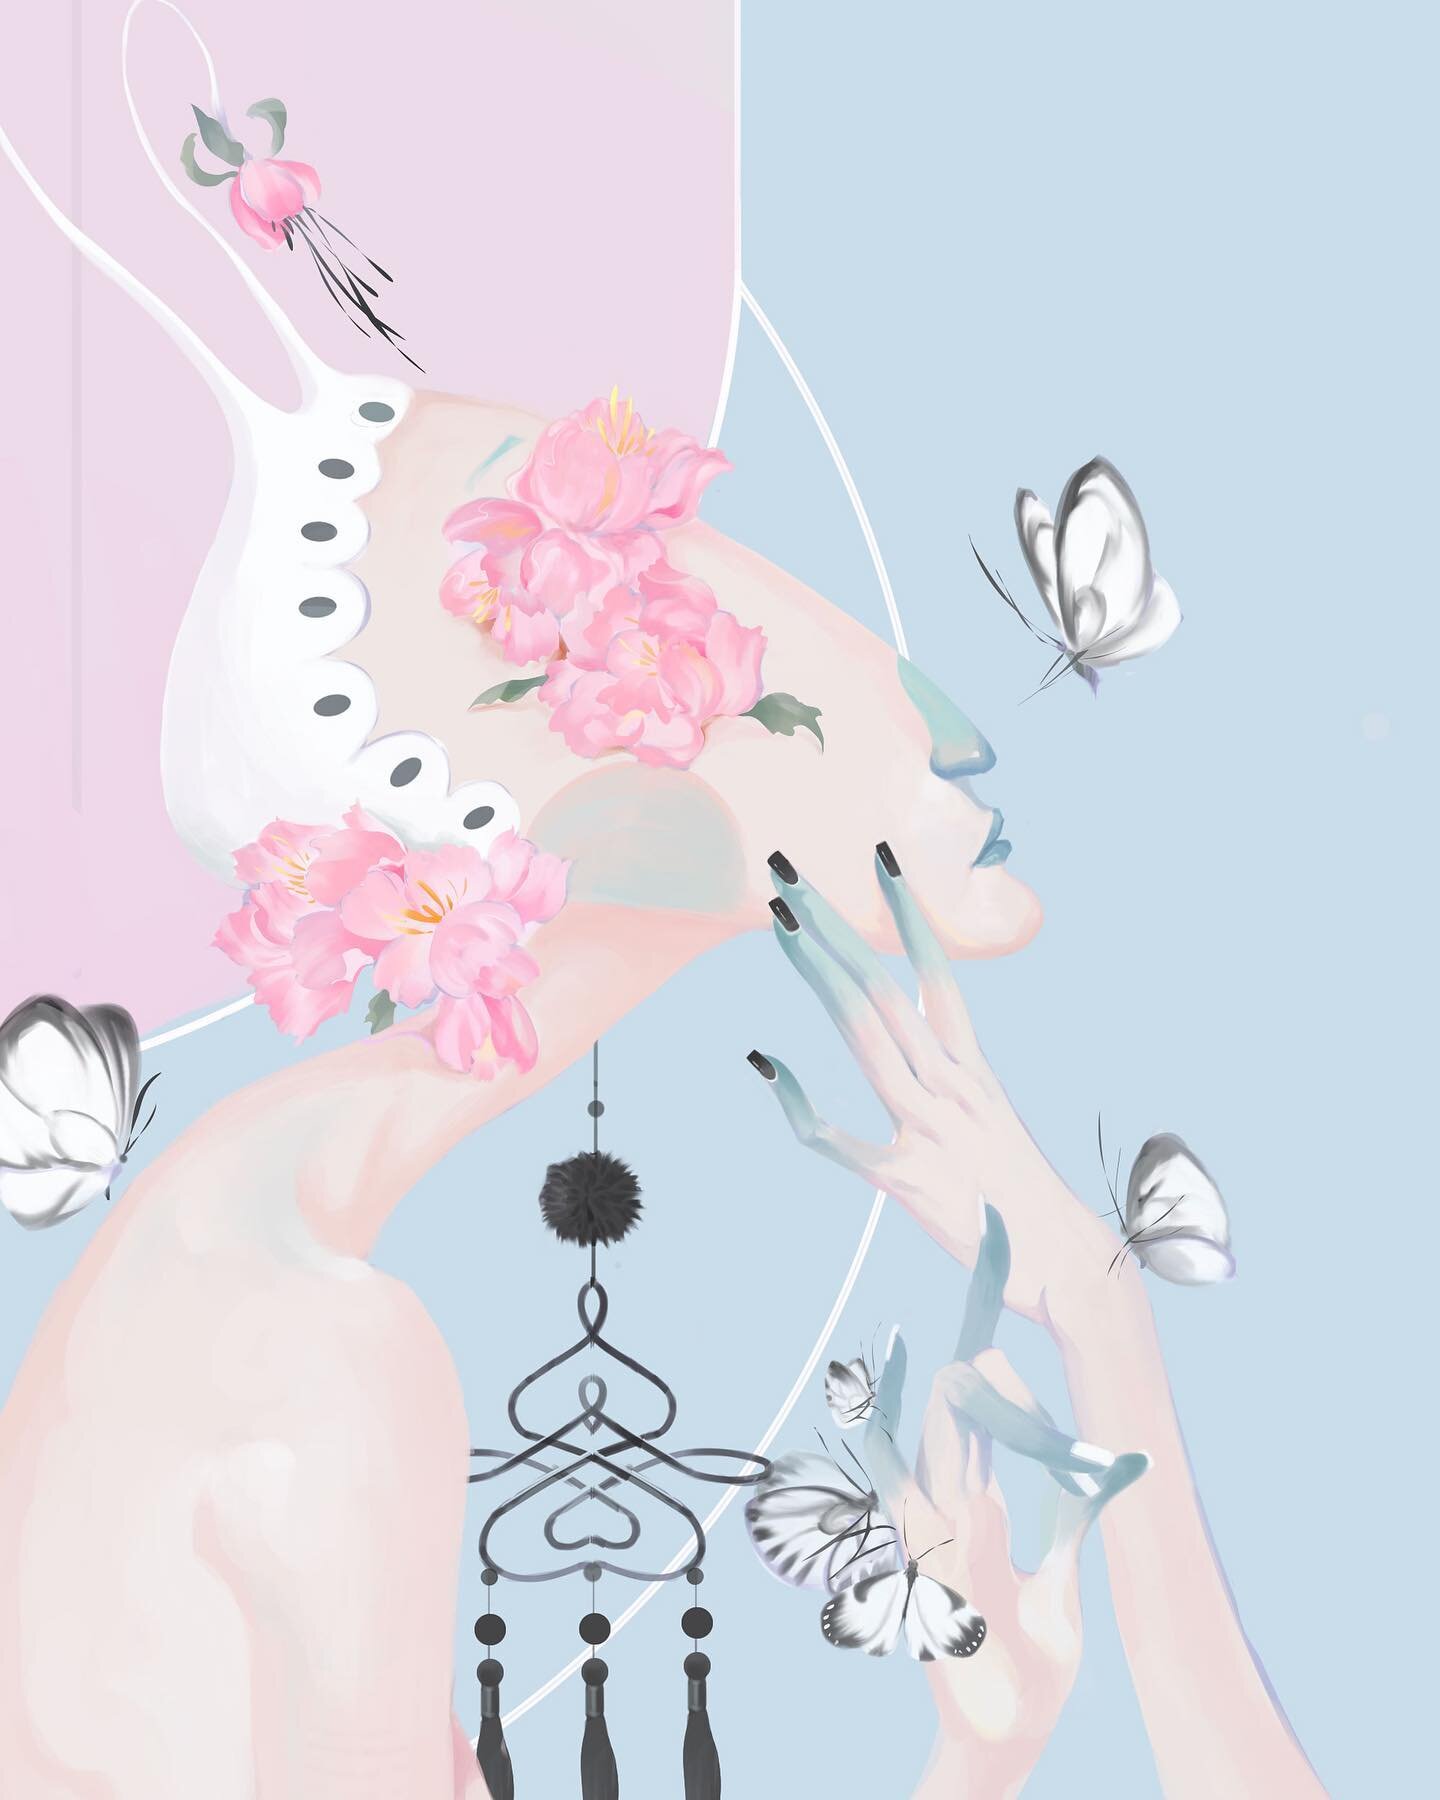 #wip ☕️ 

.
.
.
.
#digitalart #digitalillustration #photoshopart #workinprogress #paintinginprogress #fantasyart #details #artoftheday #paintingoftheday #colorpalette #artinprogress #lightcolors #whitehair #flowers #pinkflowers #whitebullterrier #pai